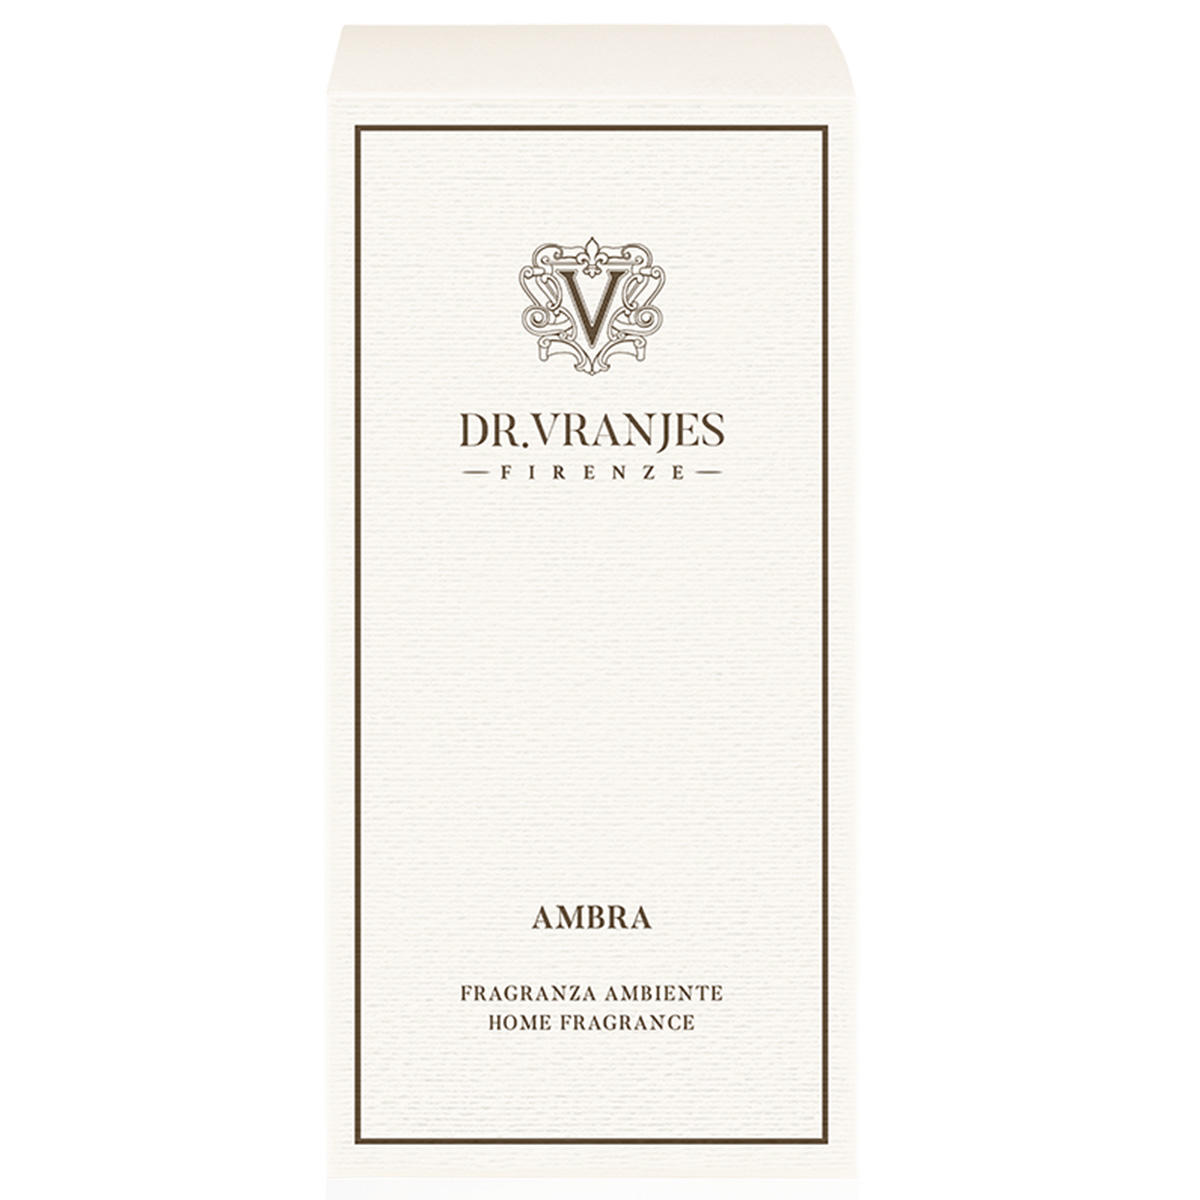 DR. VRANJES FIRENZE Ambra Home Fragrance 500 ml - 3